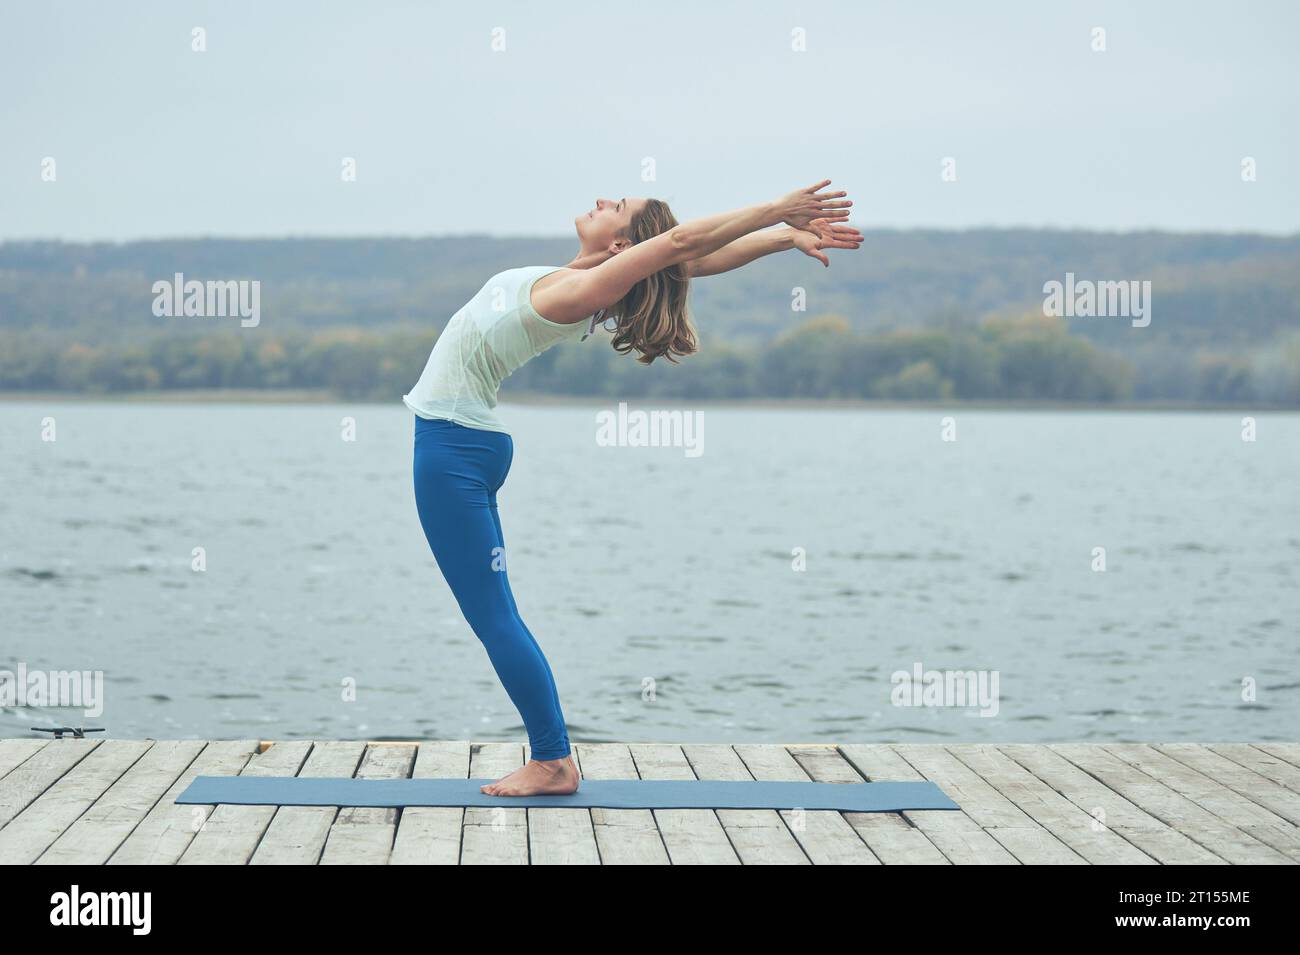 Yoga Pose: Wheel Pose (Chakrasana) | Workout Trends